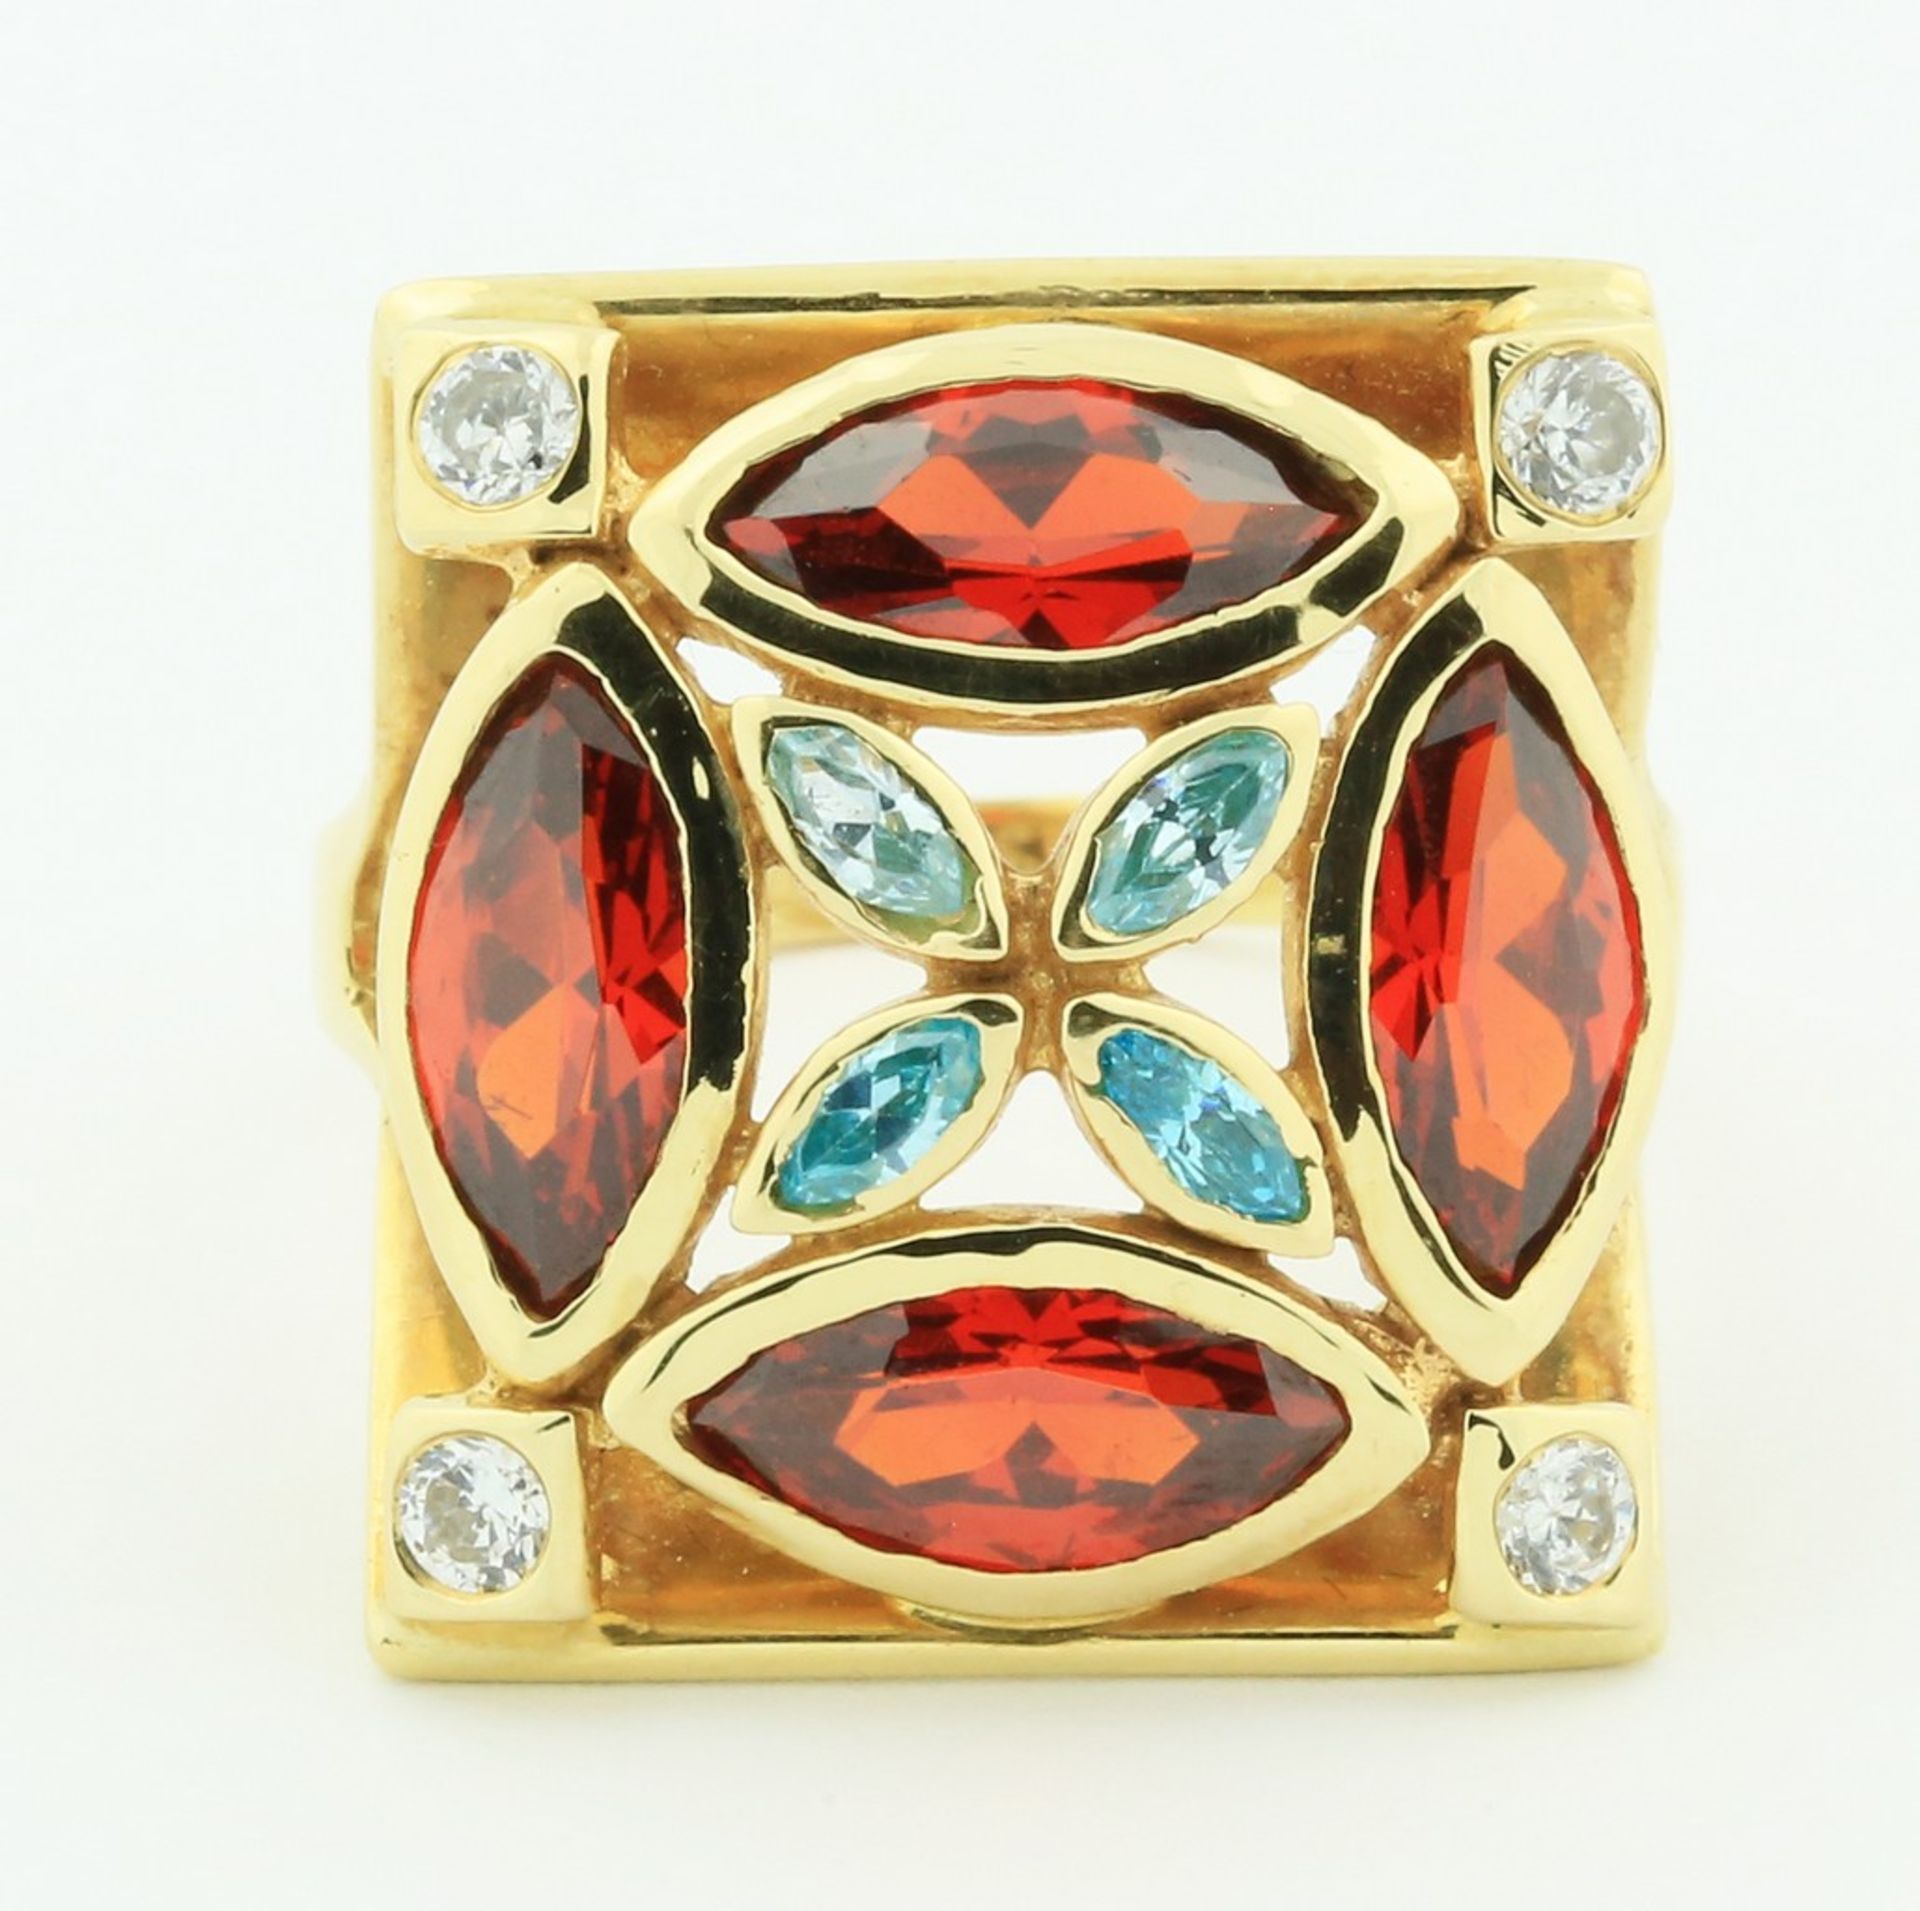 GOLD GEM-SET RING A cluster of gemstones, mounted in 14 karat yellow gold, Ring size 9.25 - Image 2 of 5